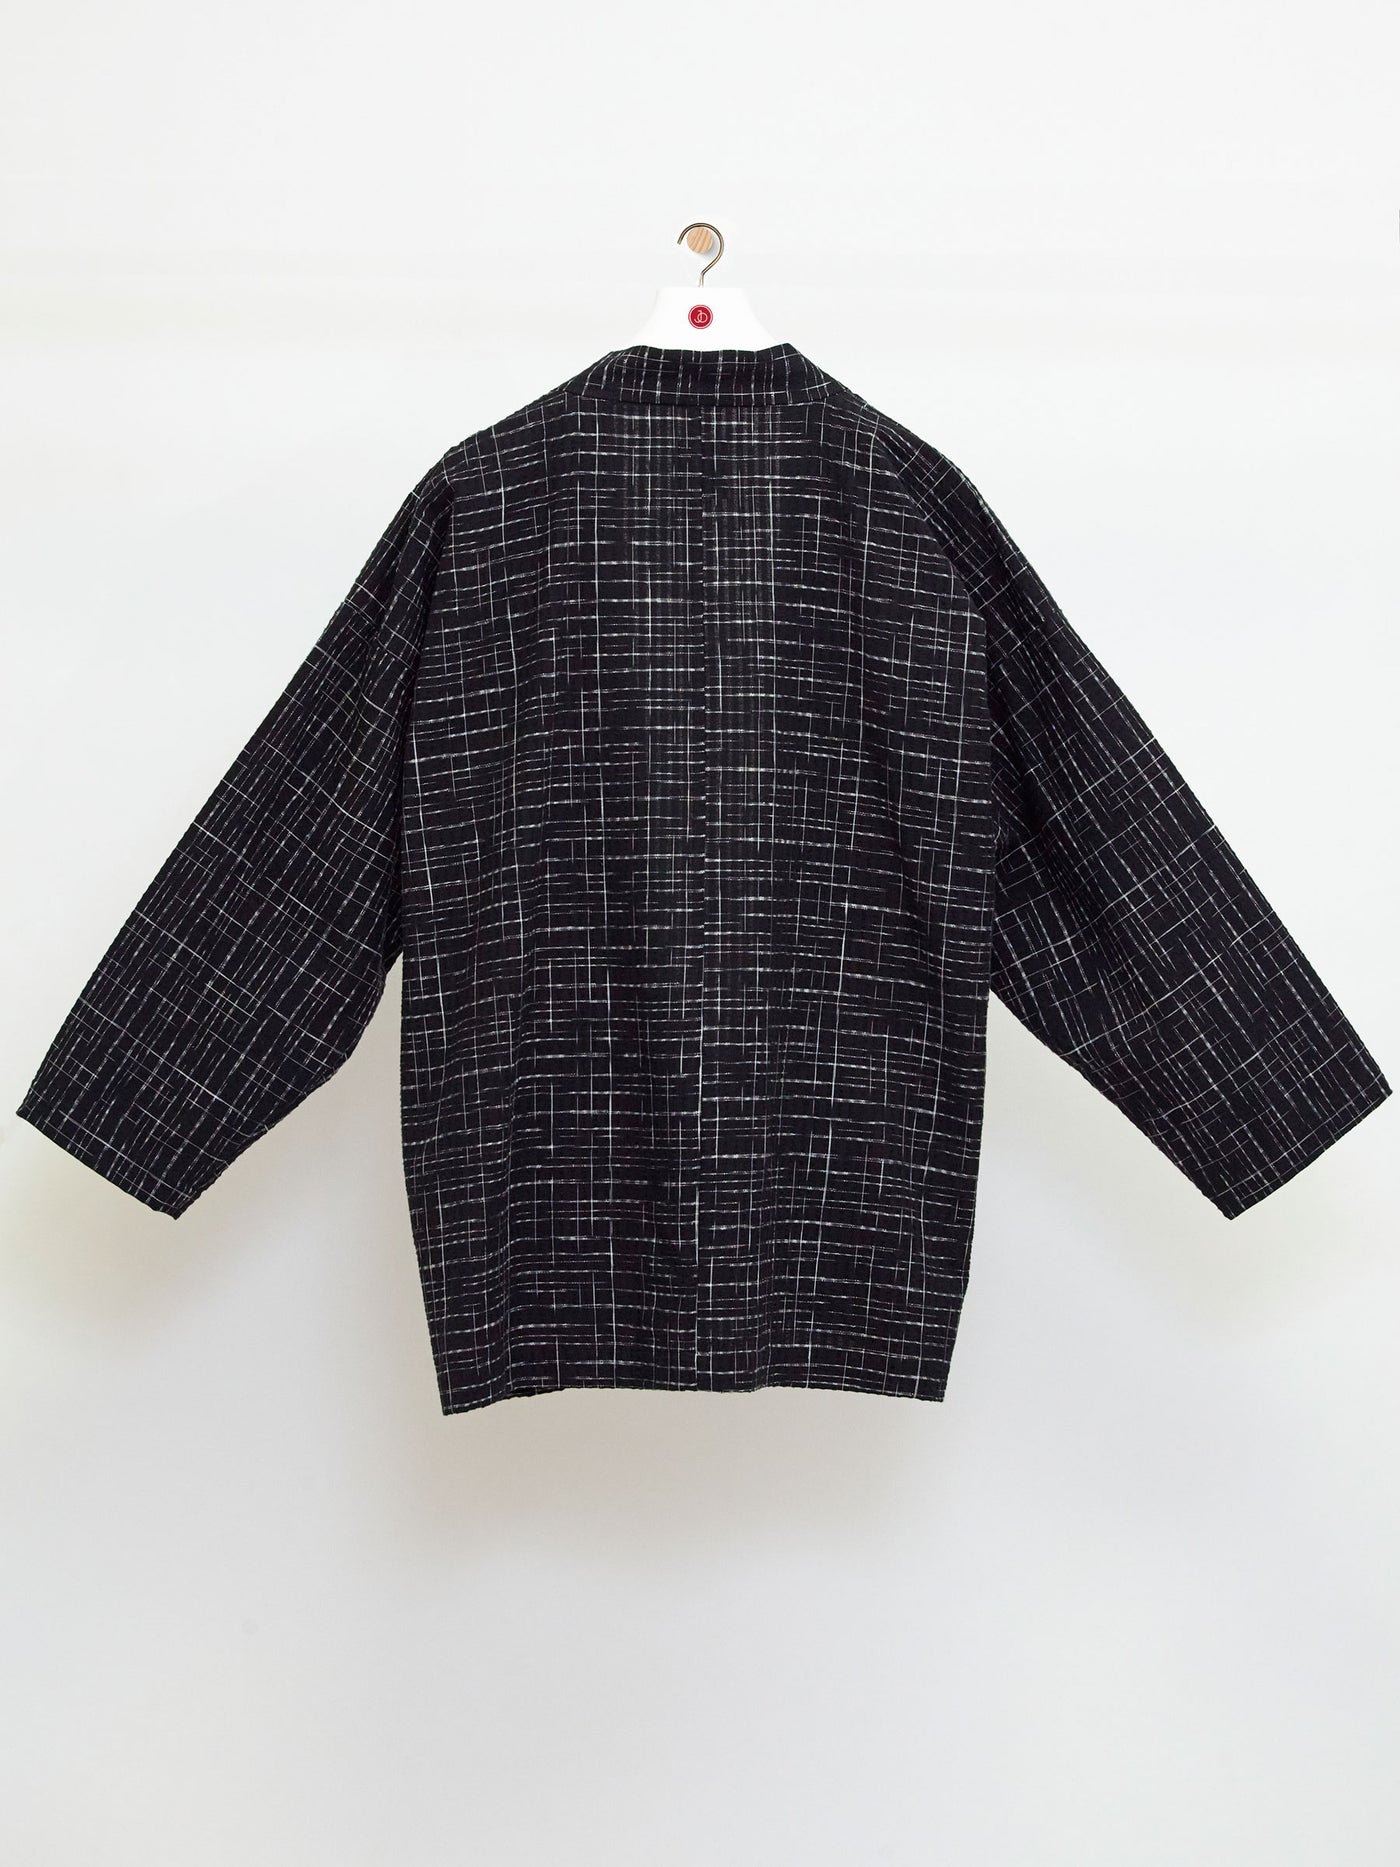 Kasumi Black Haori Kimono Jacket